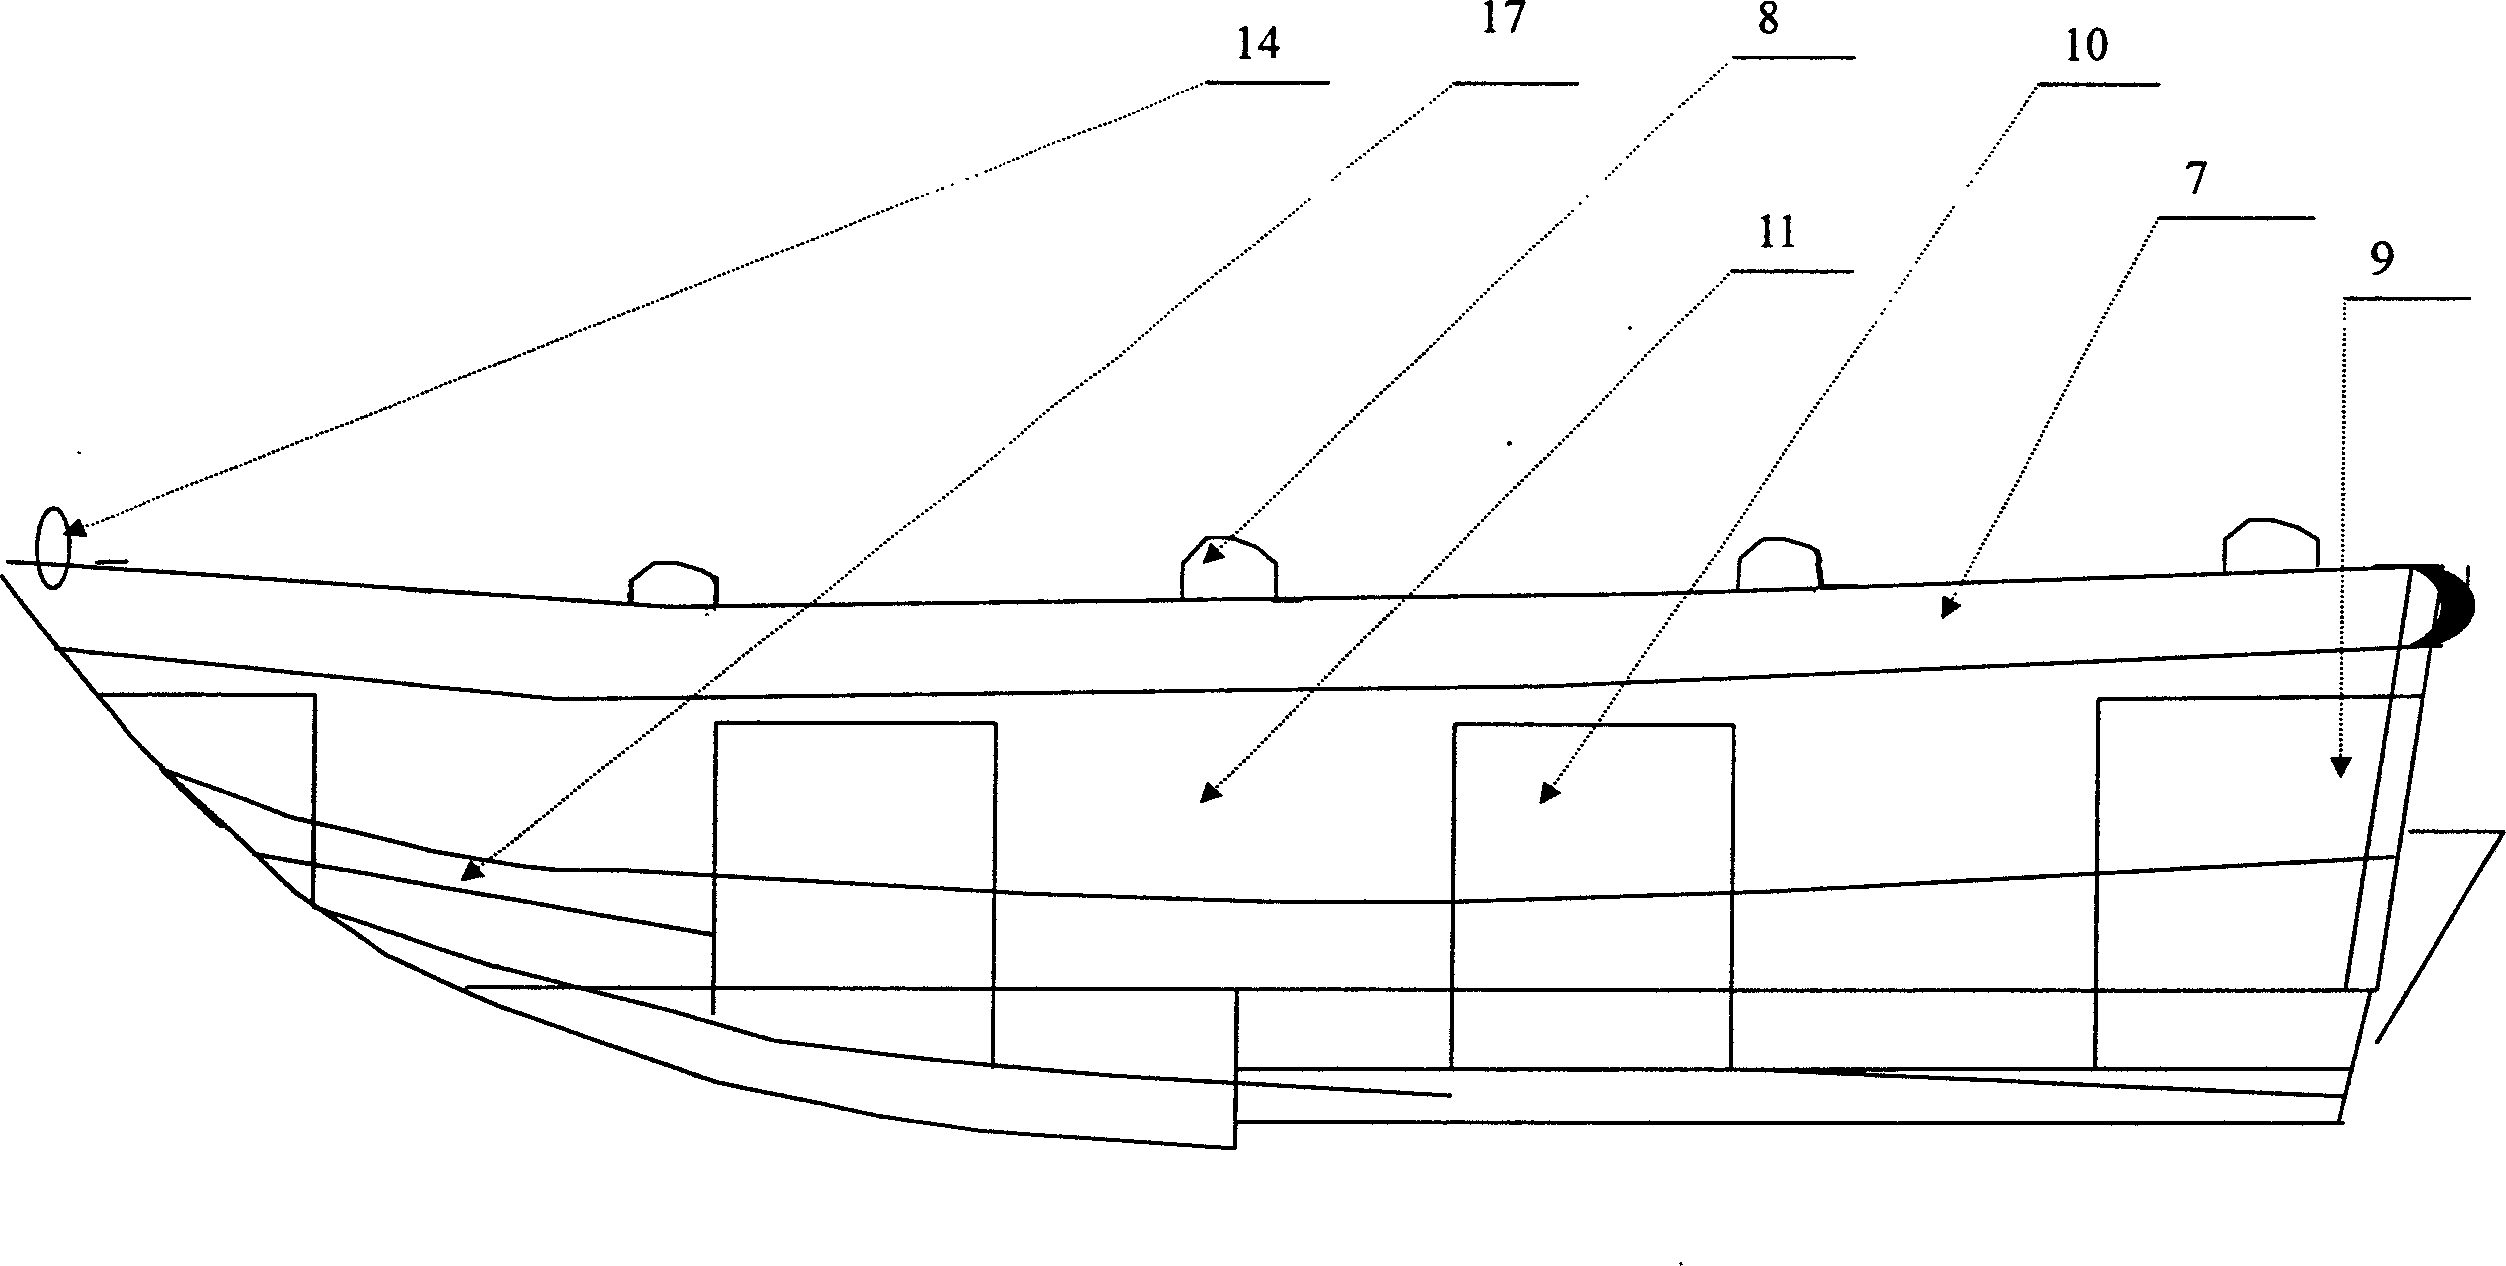 V-type profile double semi-float slide plate added motorboat